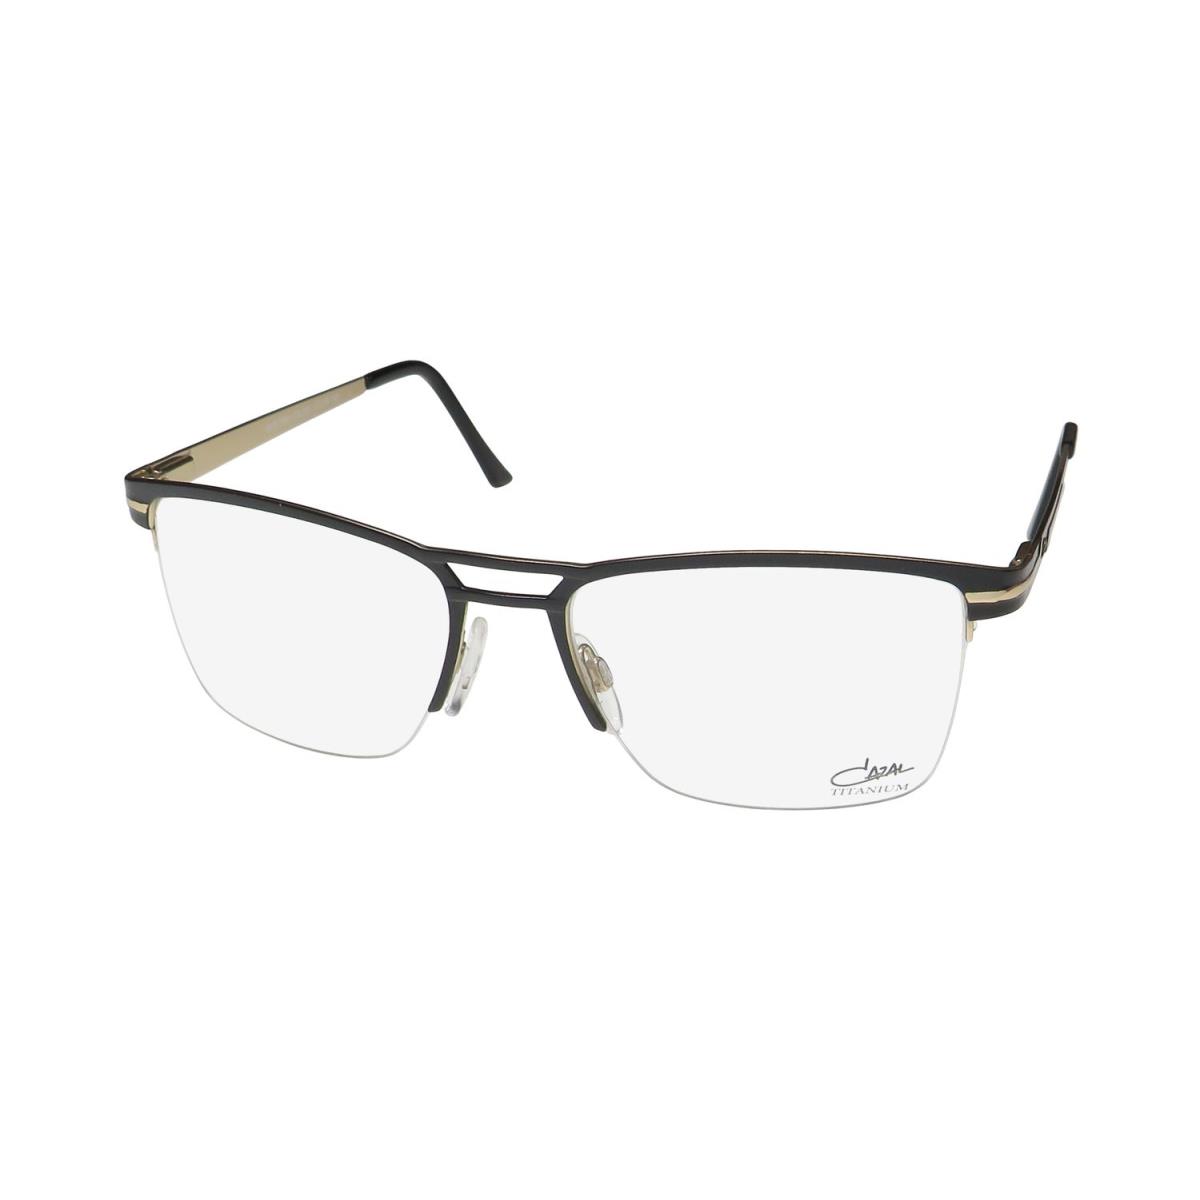 Cazal 7080 Titanium Metal Made IN Germany Contemporary Eyeglass Frame/glasses Black